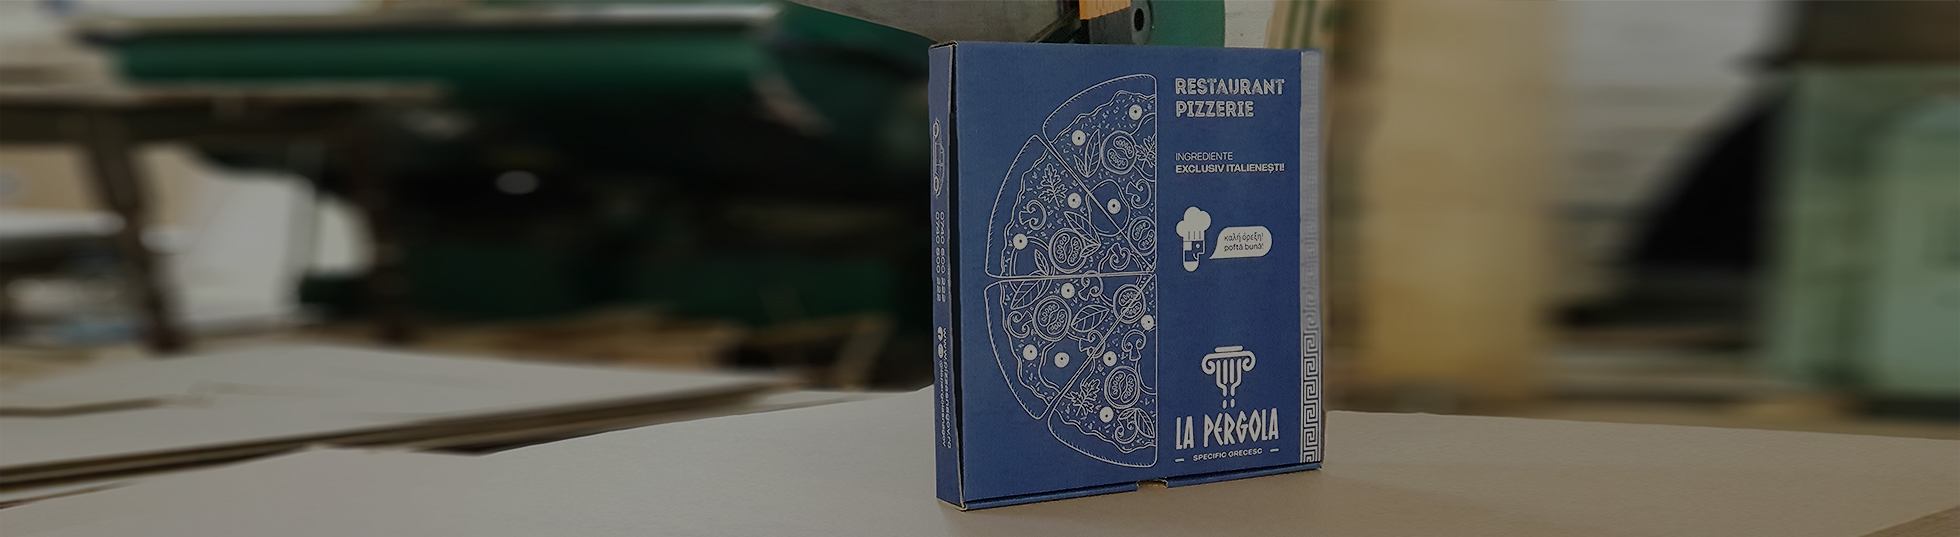 slider cutii pizza din carton personalizate color sau alb negru 1